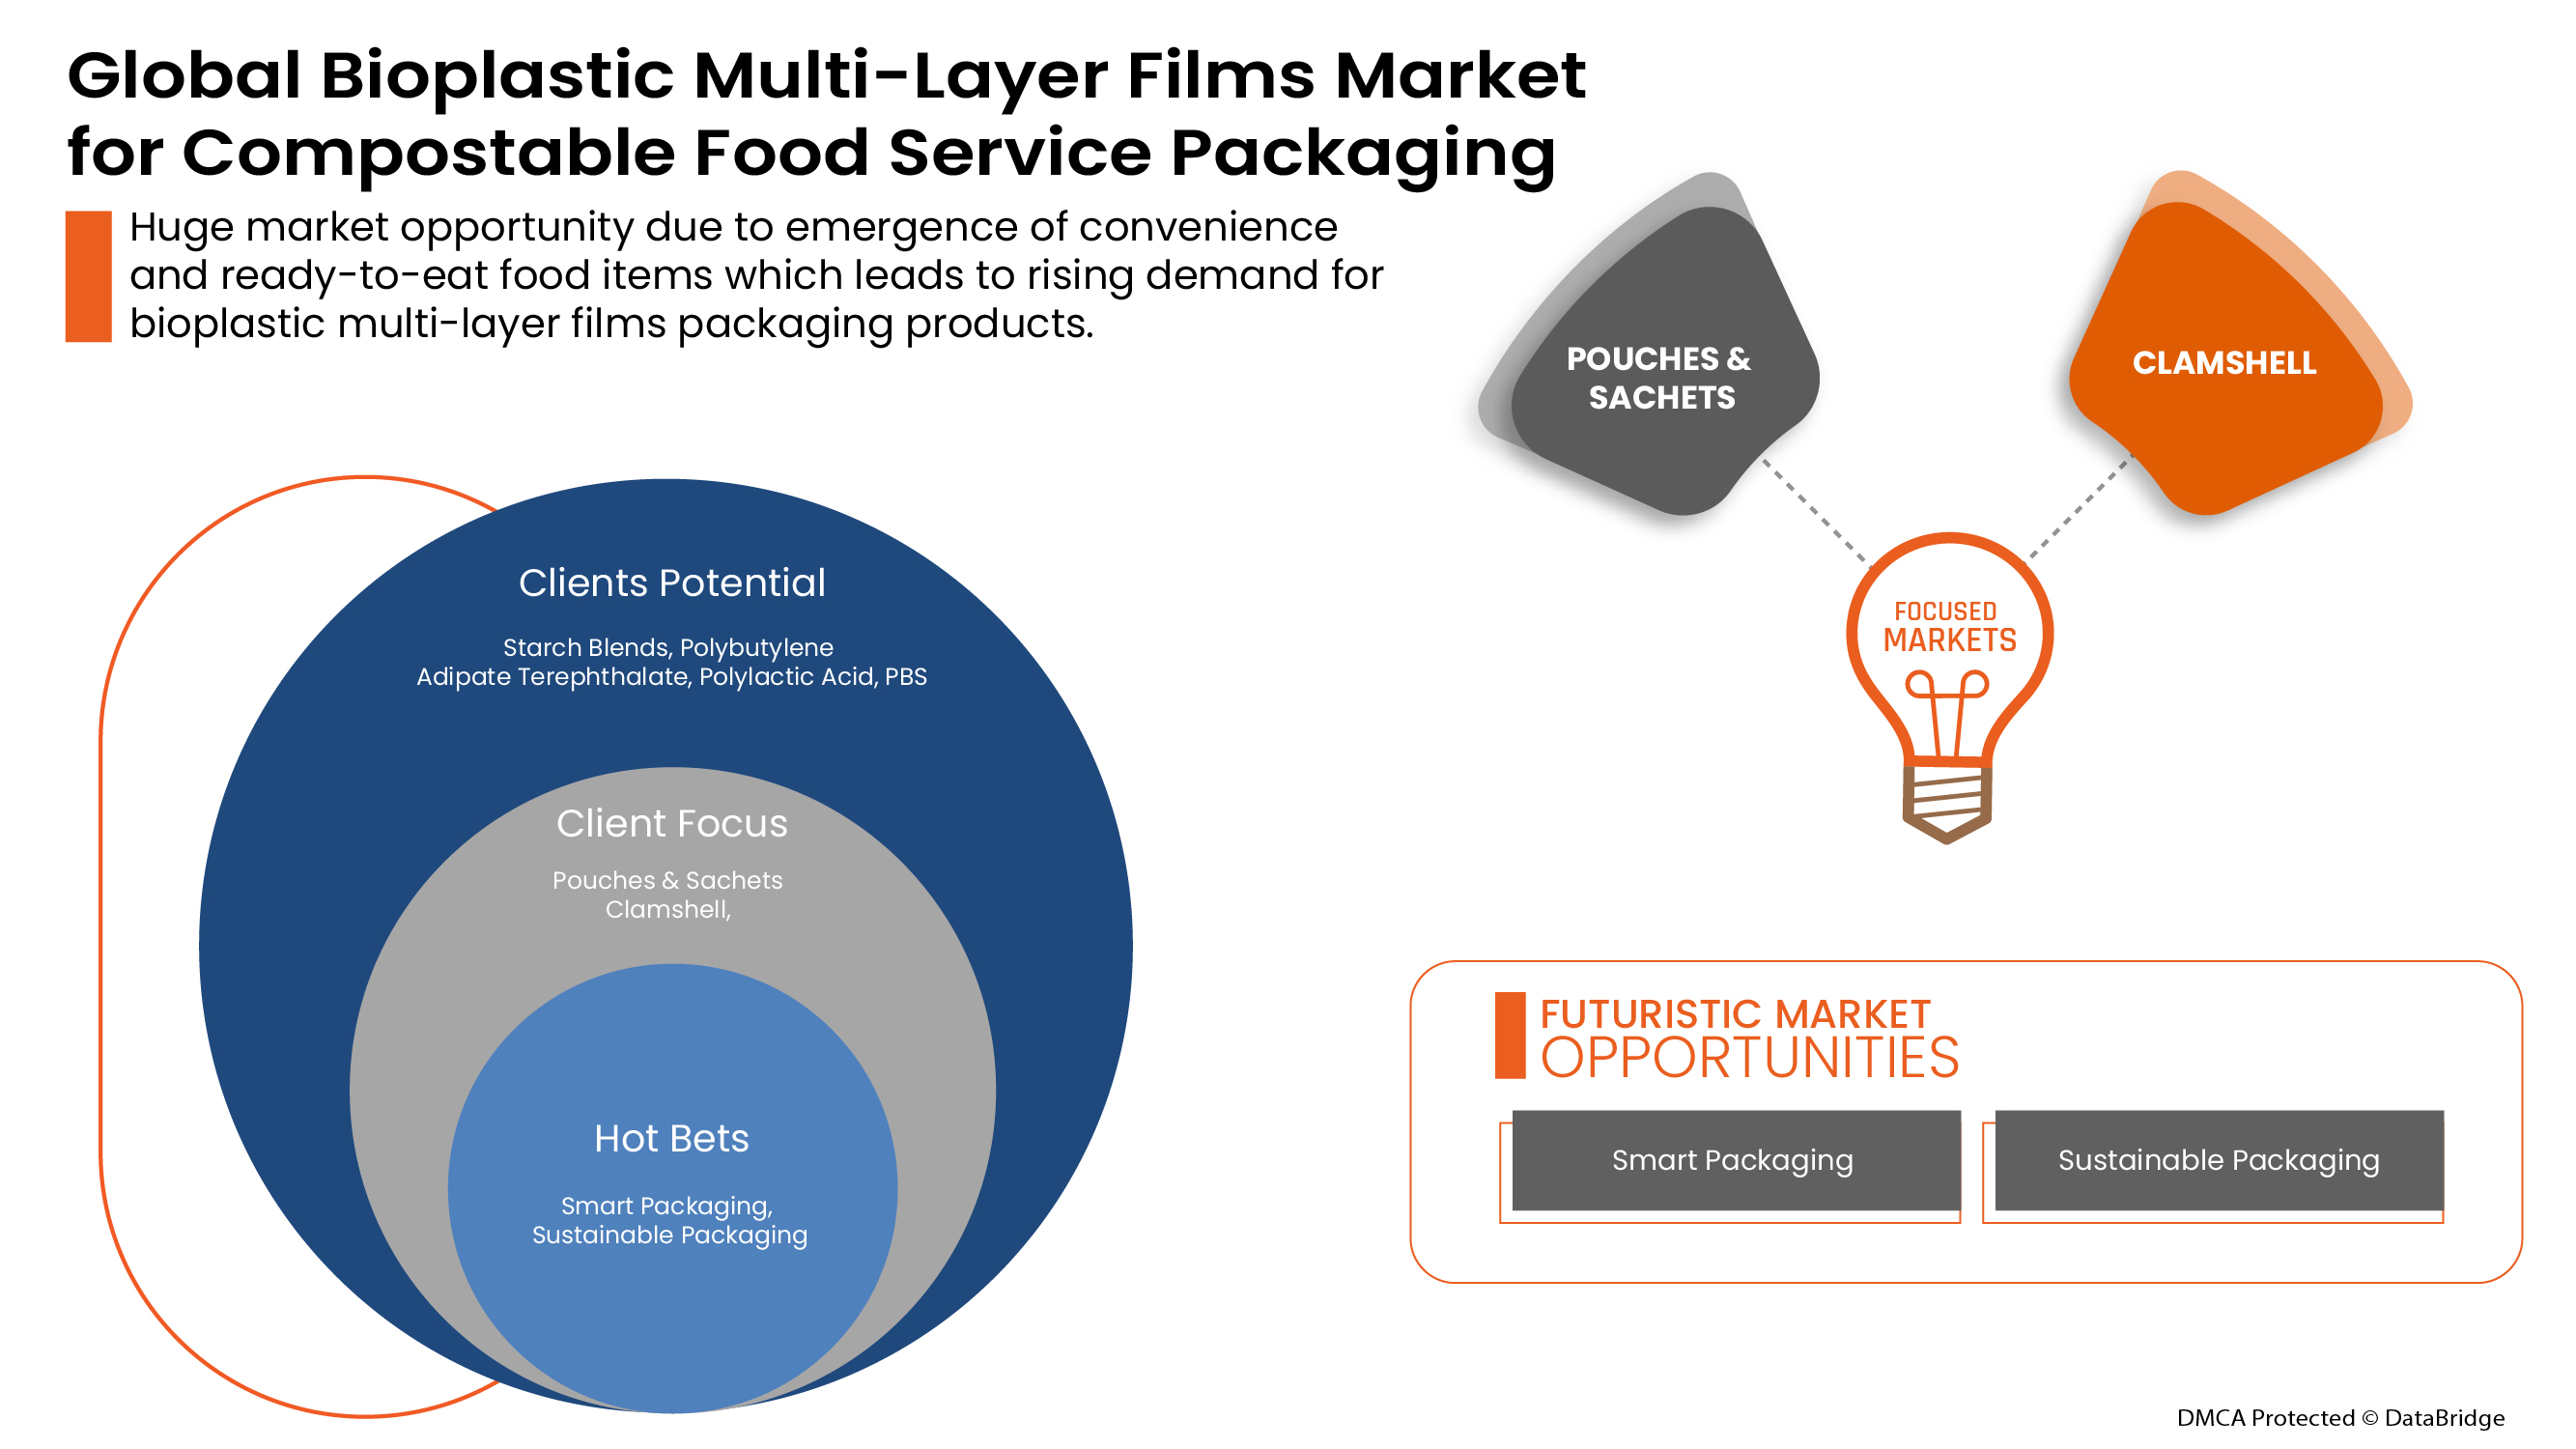 Bioplastic Multi-Layer Films Market